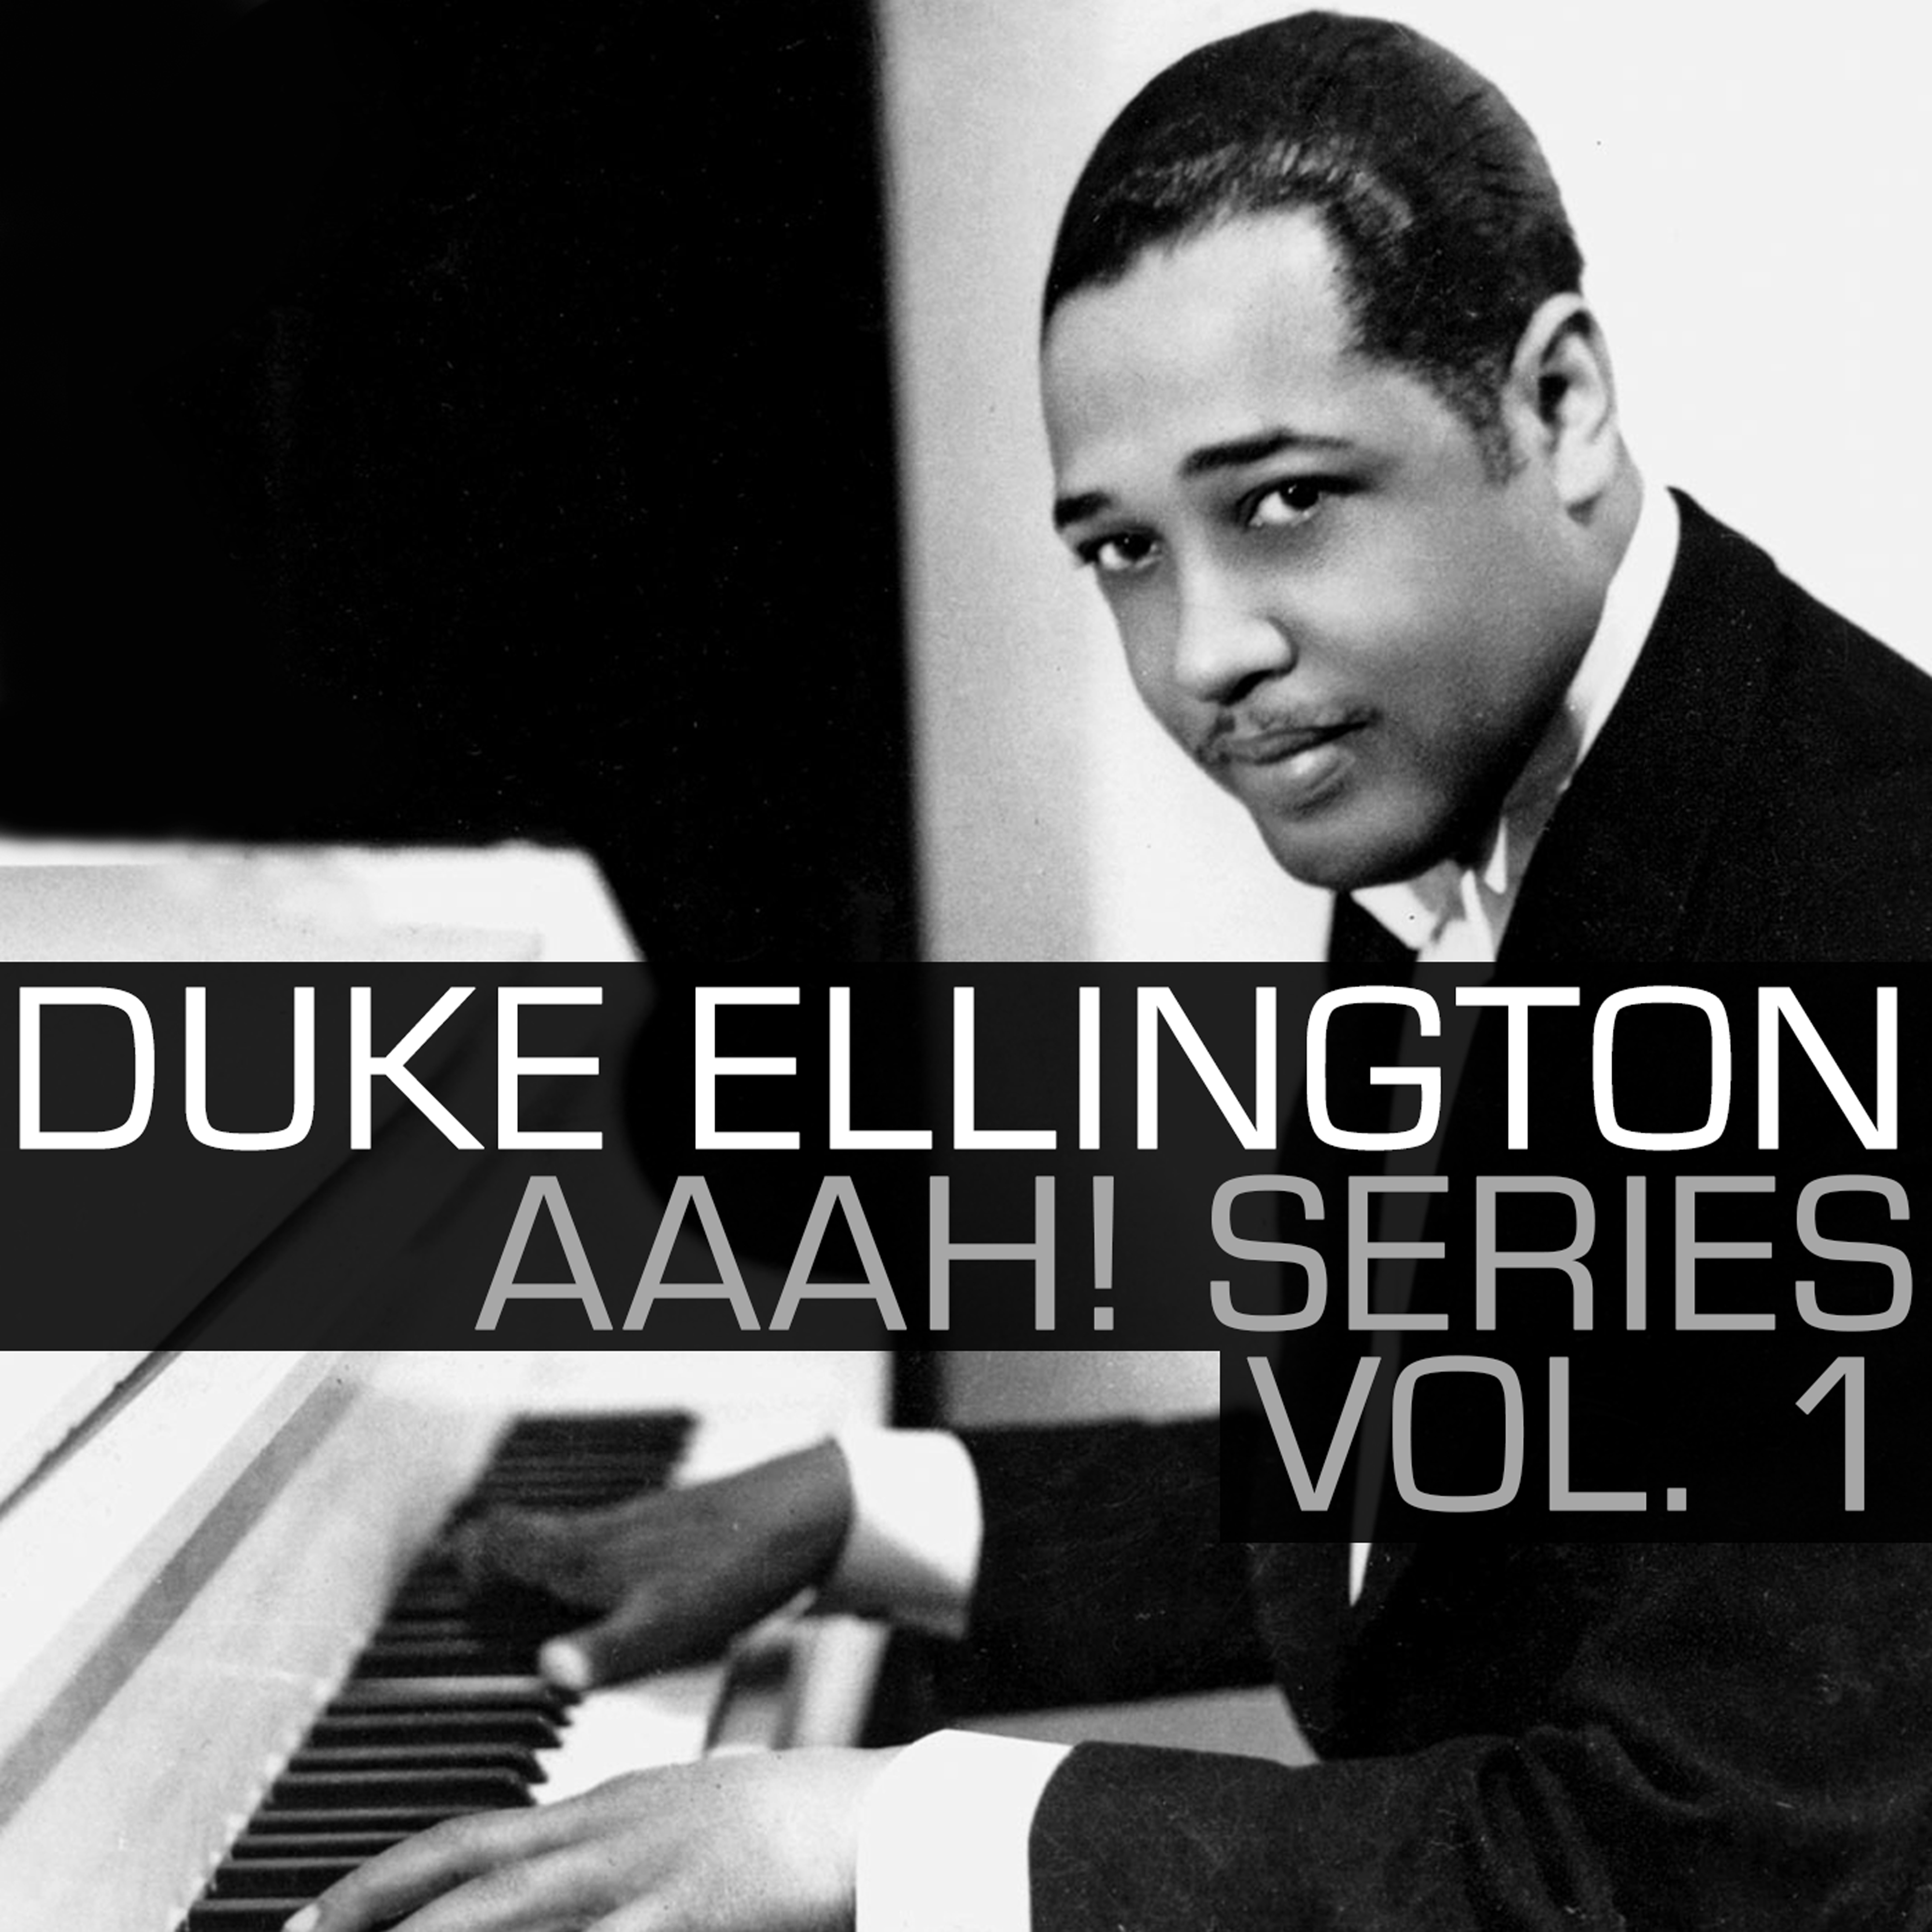 Aaah! - Duke Ellington, Vol. 1